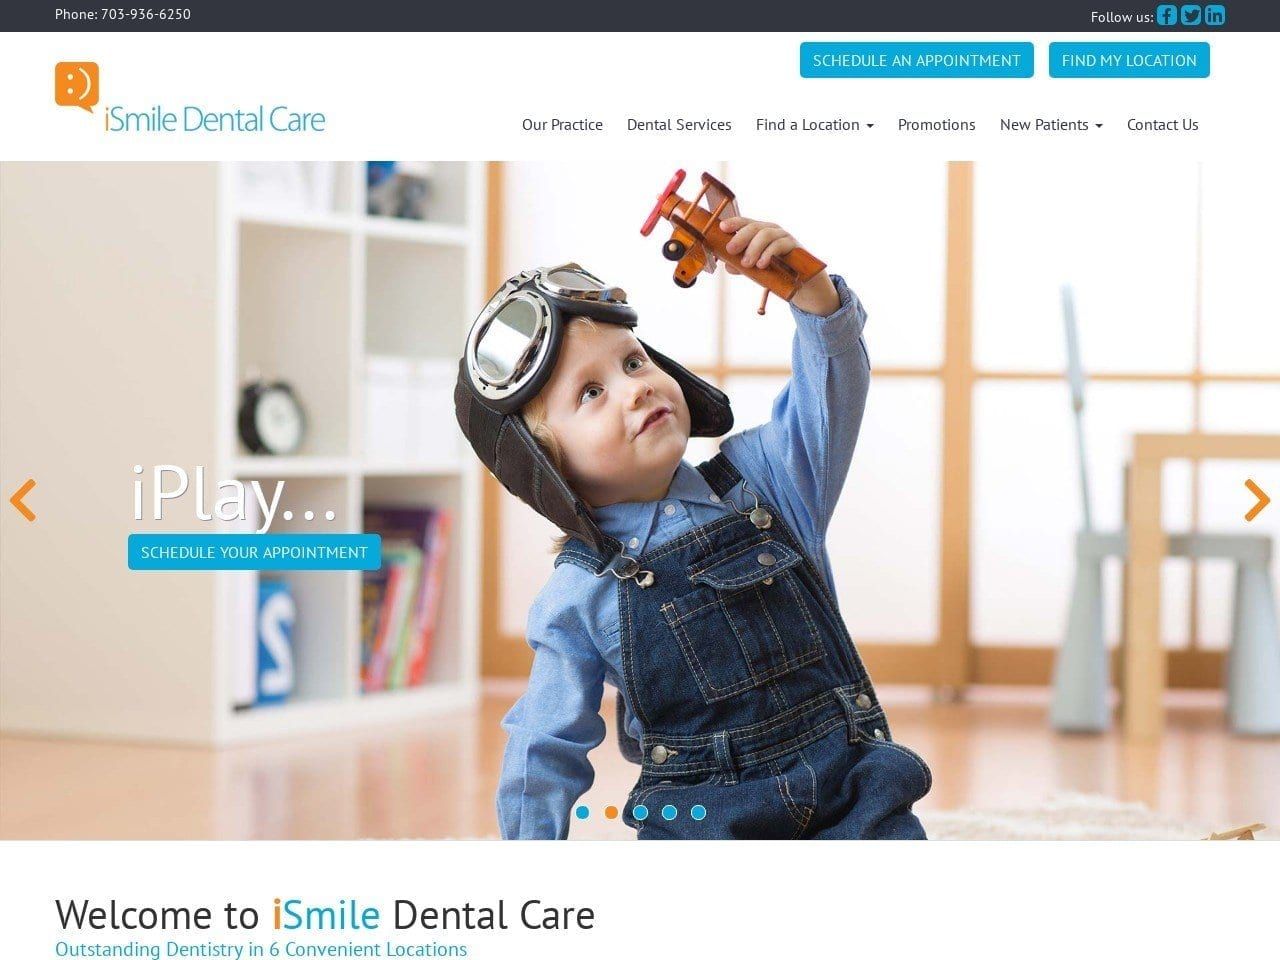 iSmile Dental Care Website Screenshot from ismileva.com